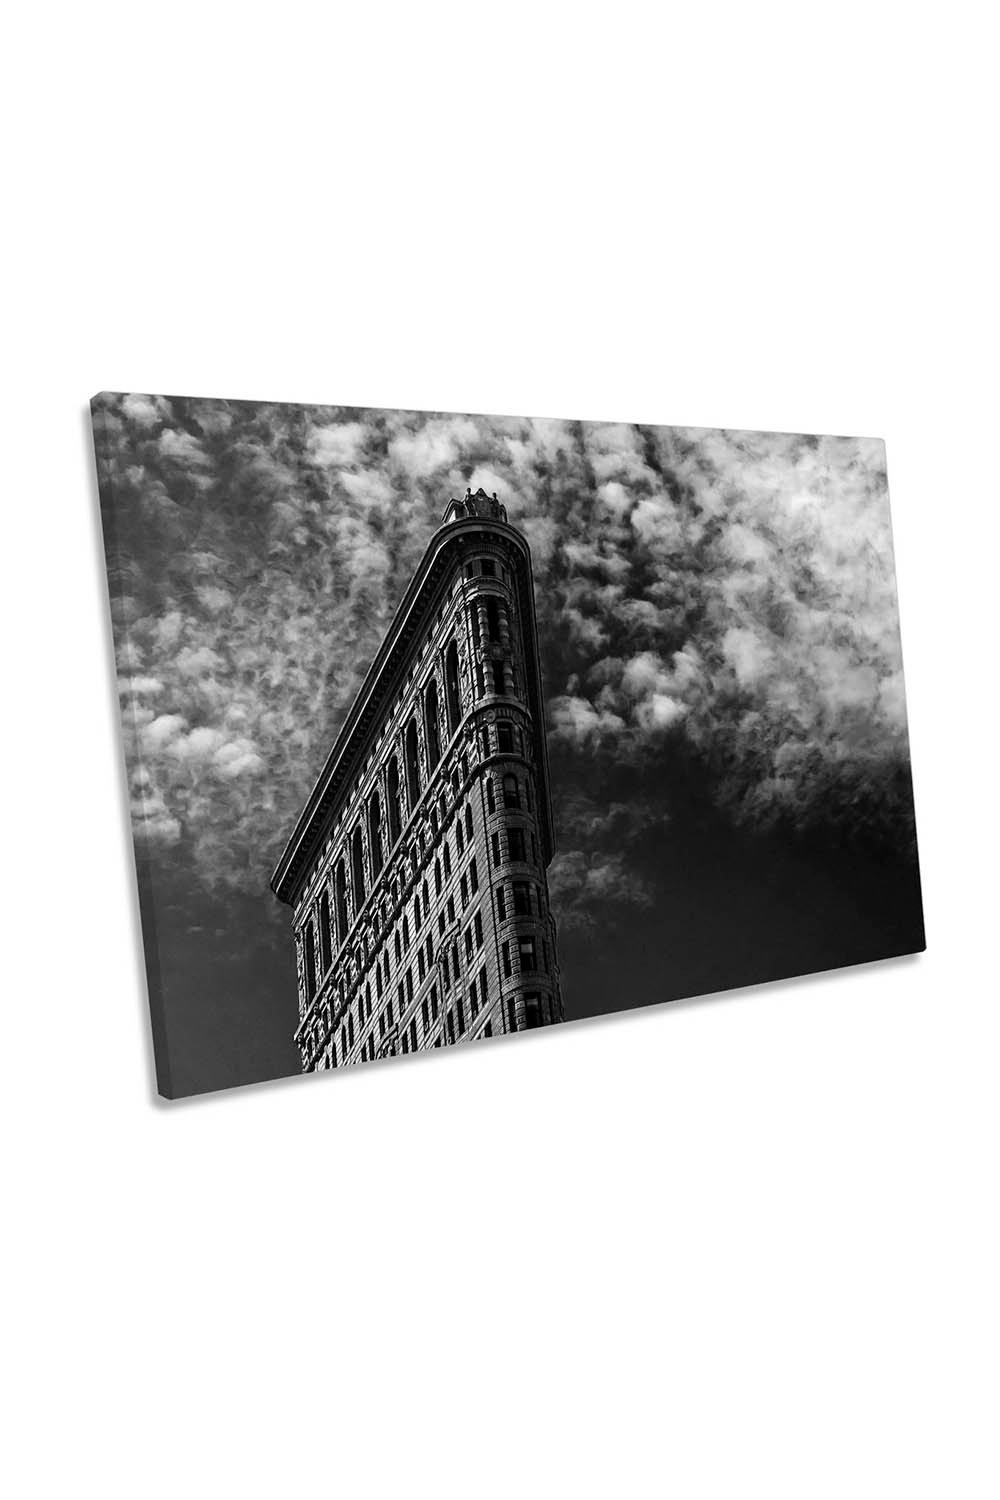 New York City Flatiron Building Canvas Wall Art Picture Print